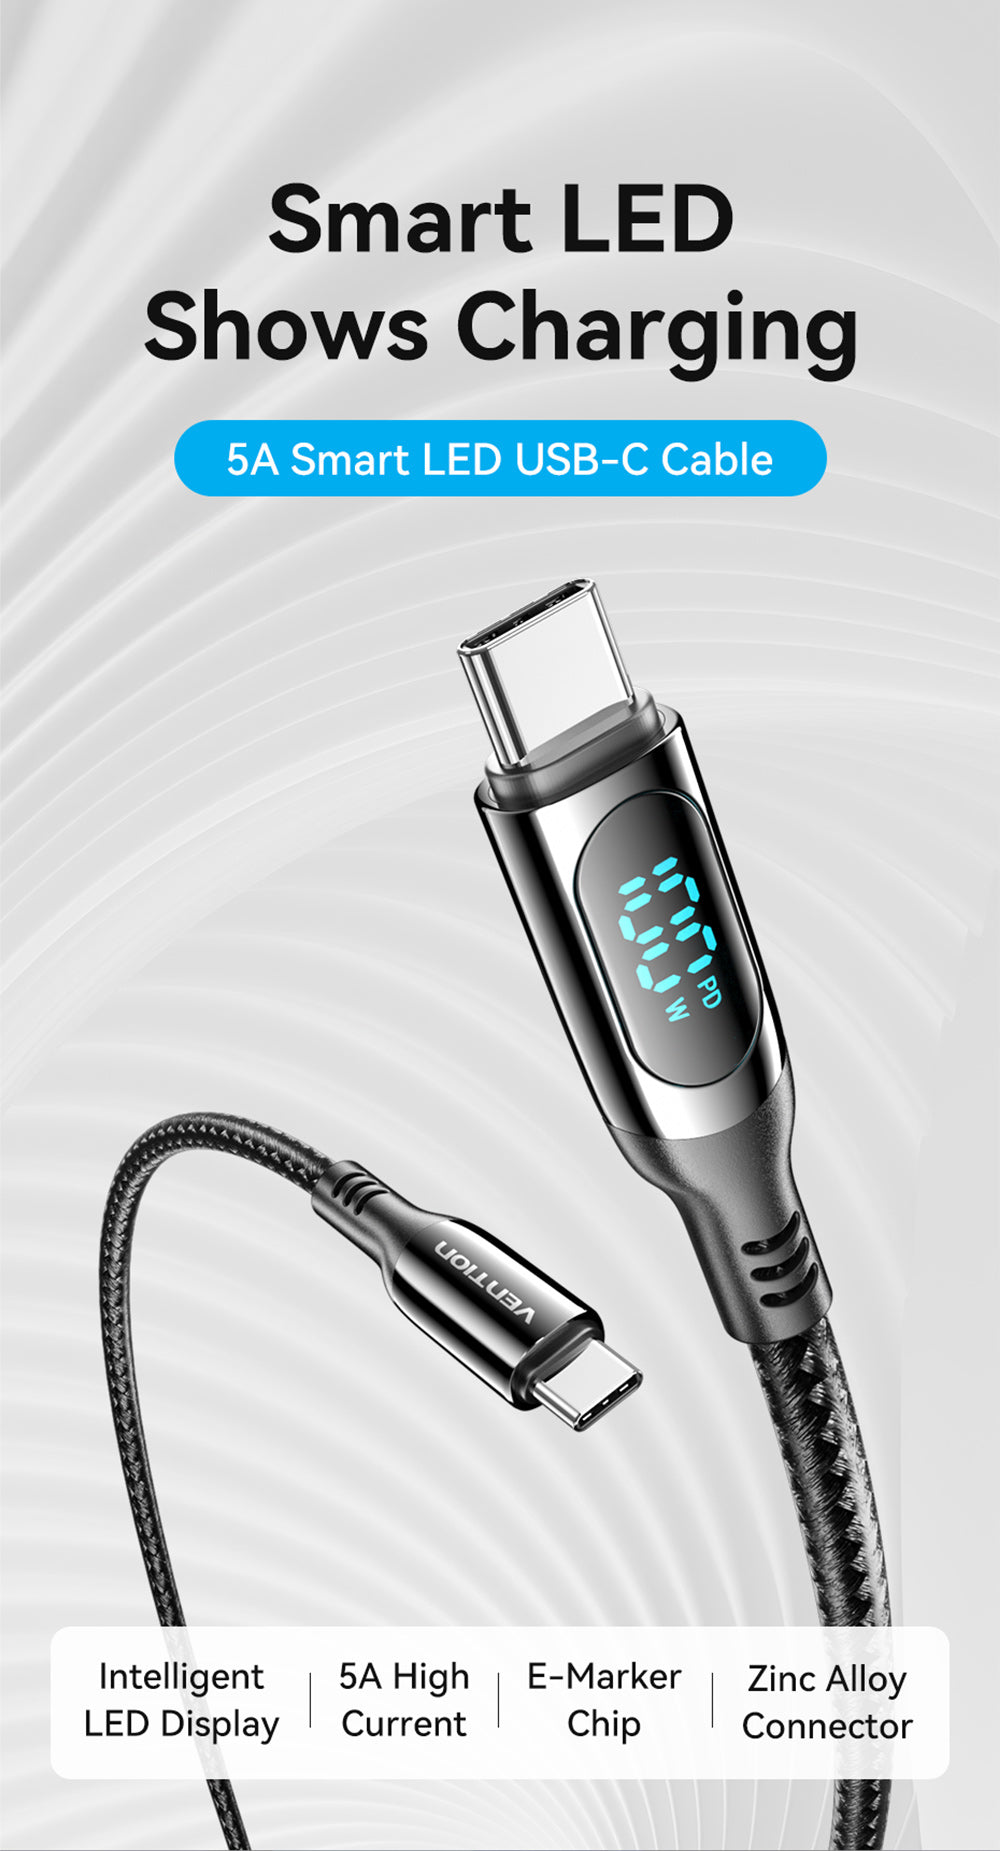 Cable alargador usb 2.0 vention cbibg/ usb macho - usb - Depau